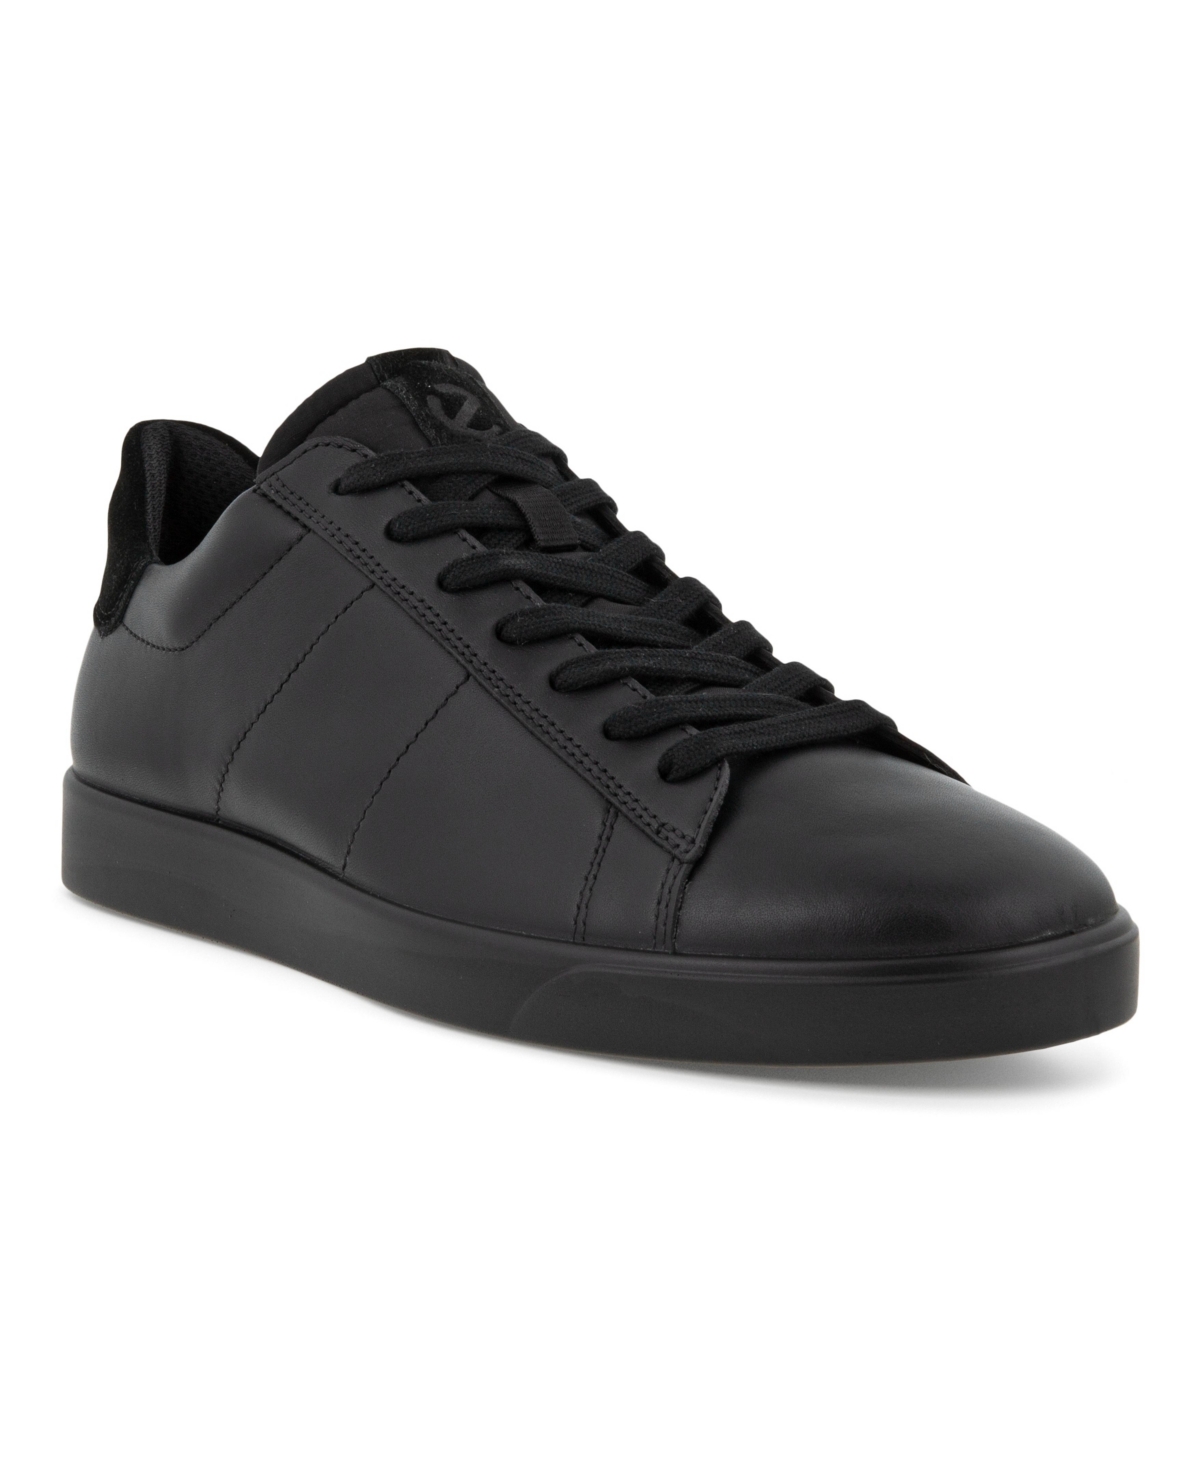 Men's Street Lite Retro Sneakers - Black